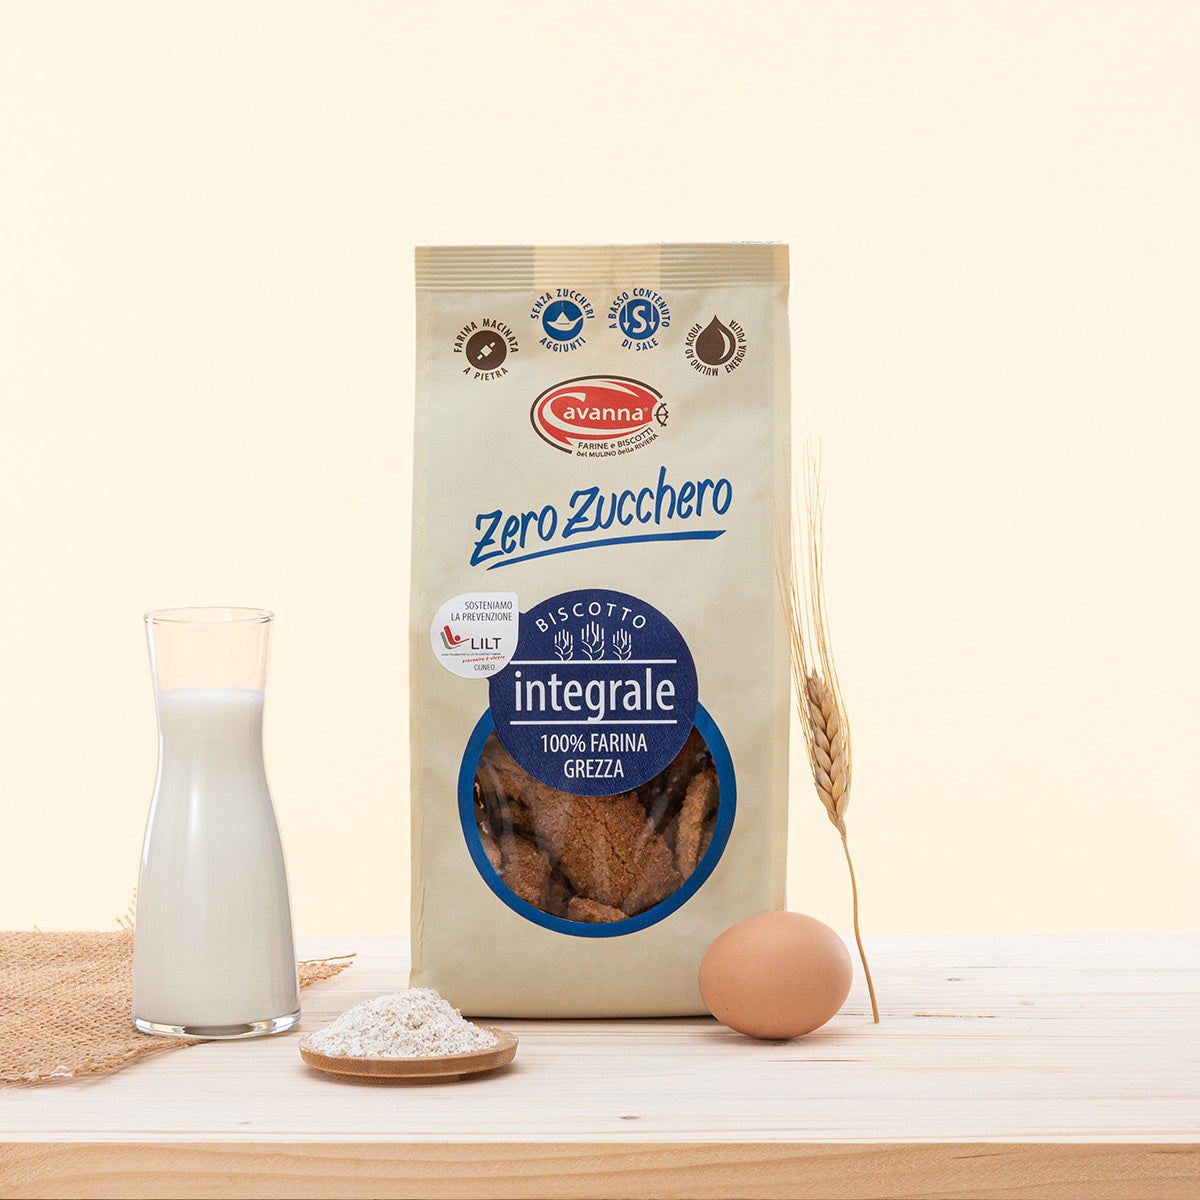 Biscotti Senza Zucchero Integrali - No OGM e conservanti - 320g – Biscotti  Cavanna